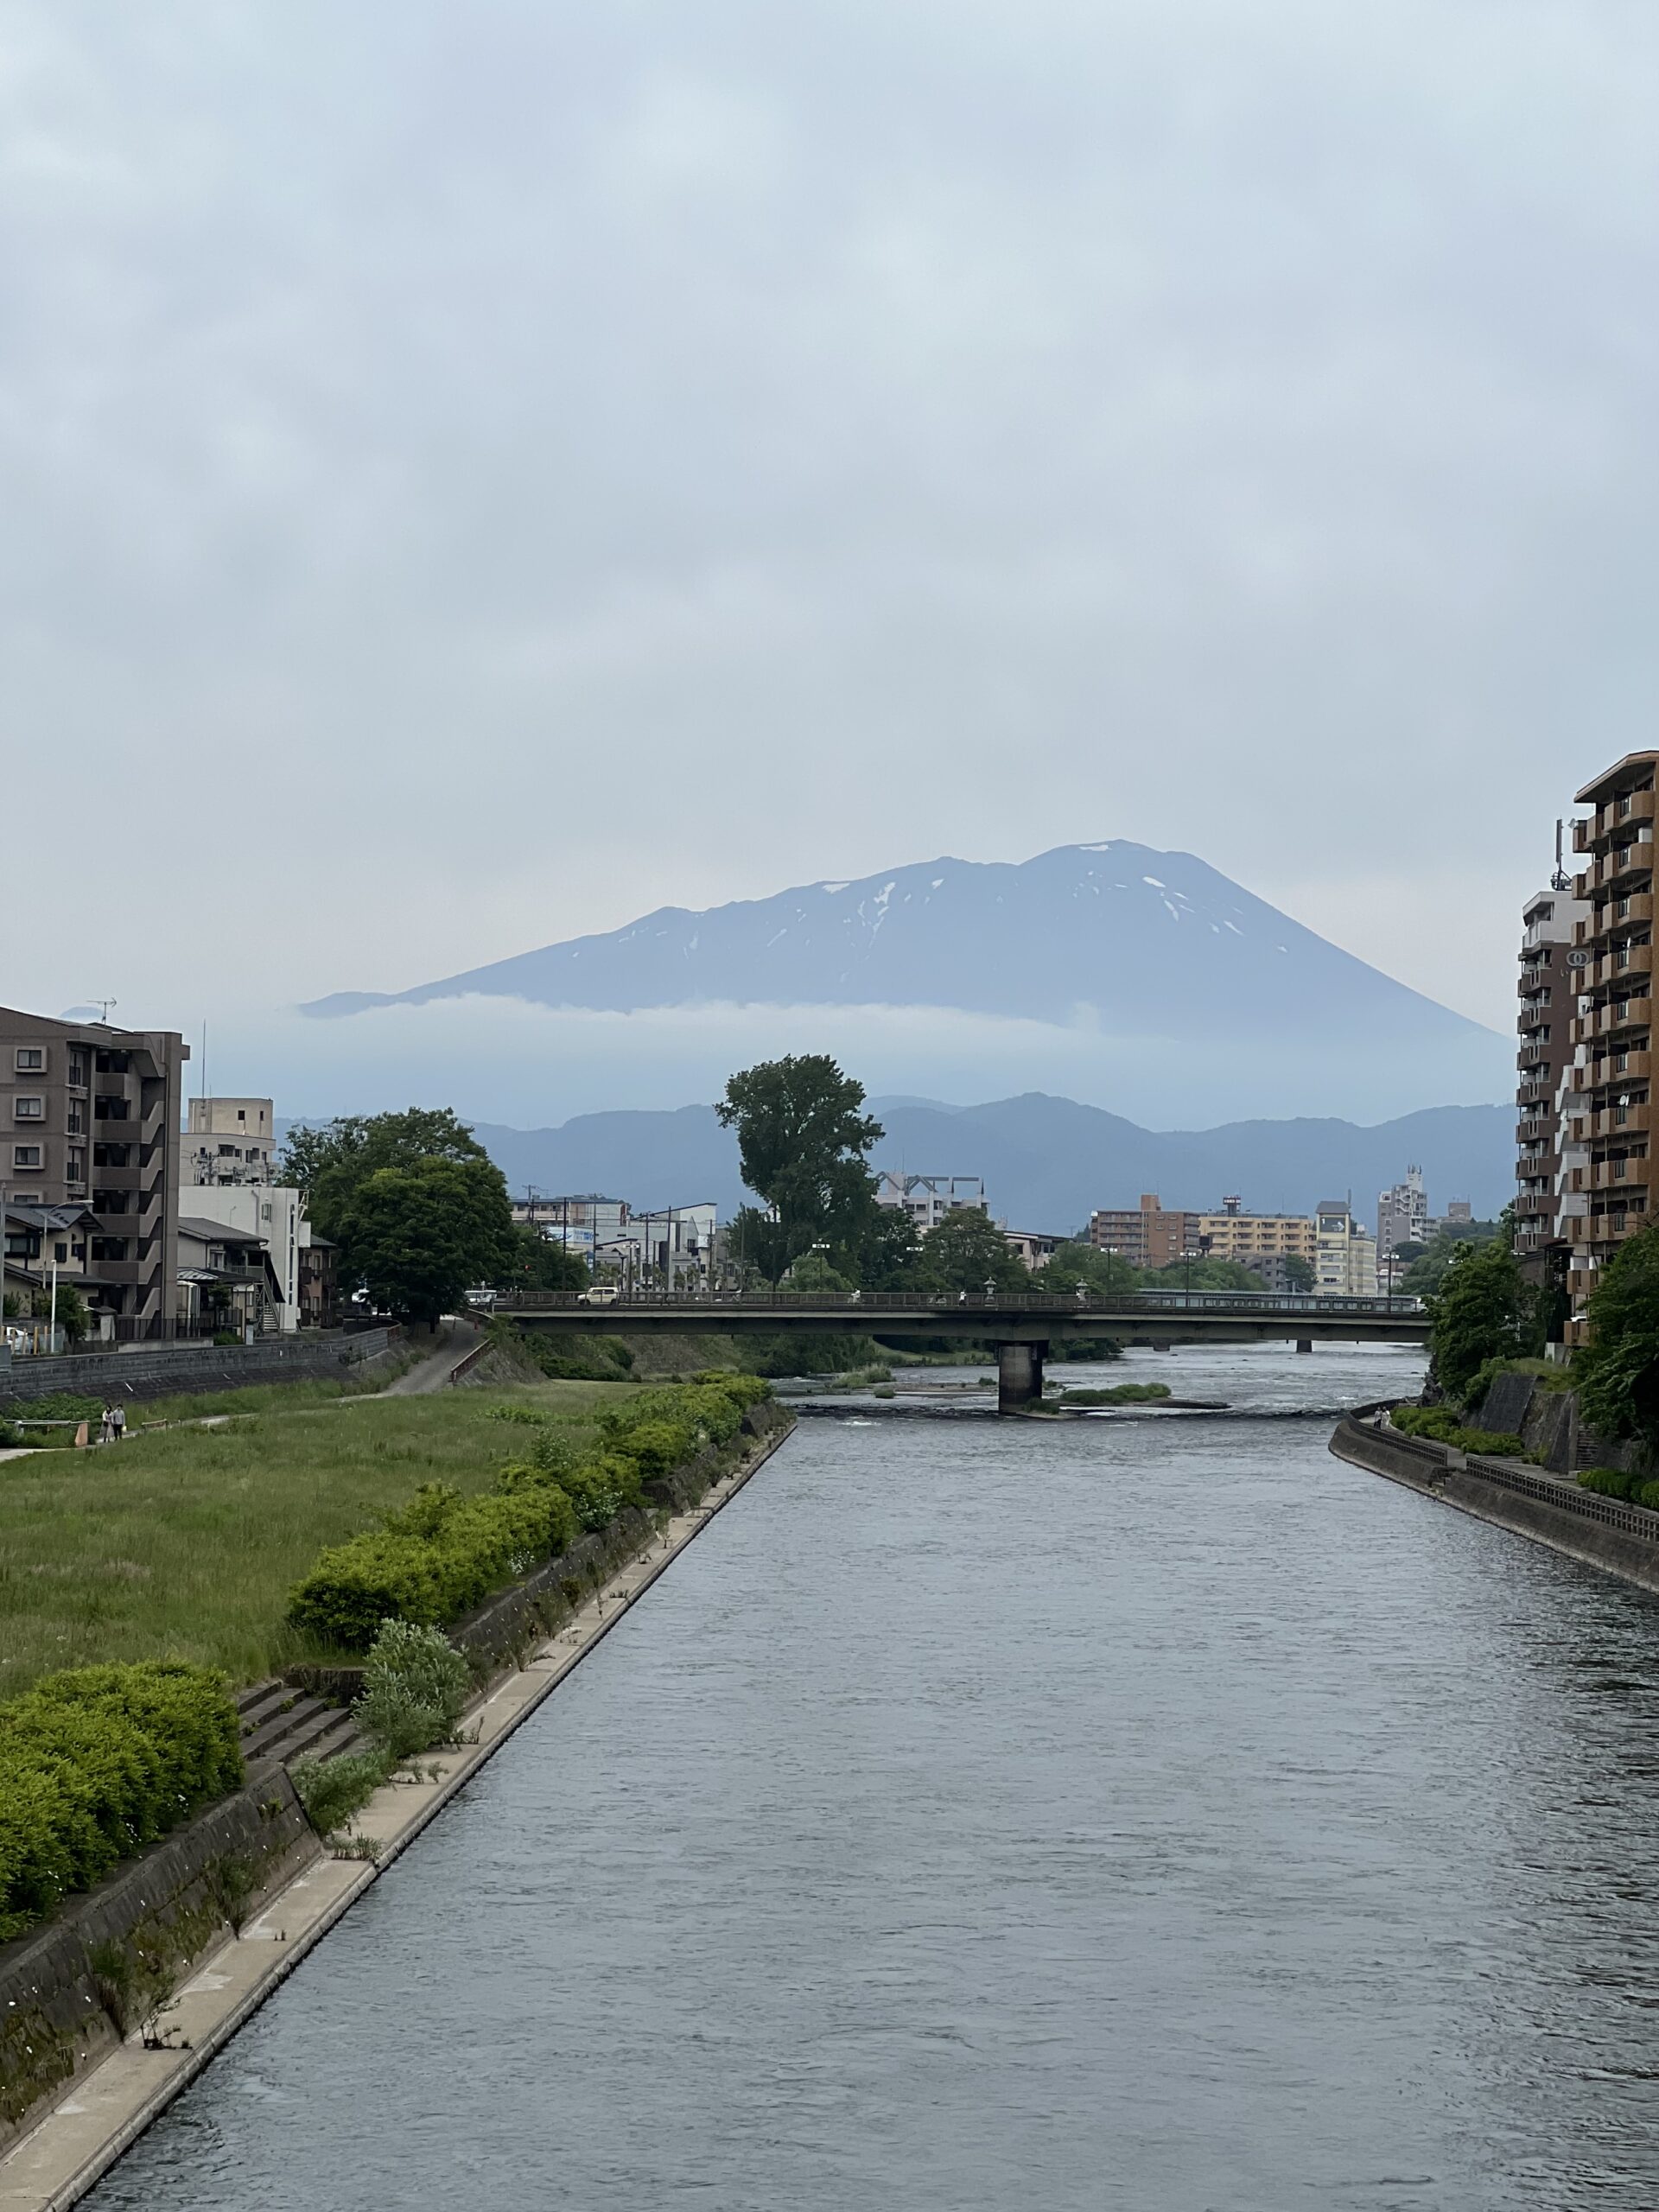 kitakami river and mt. iwate